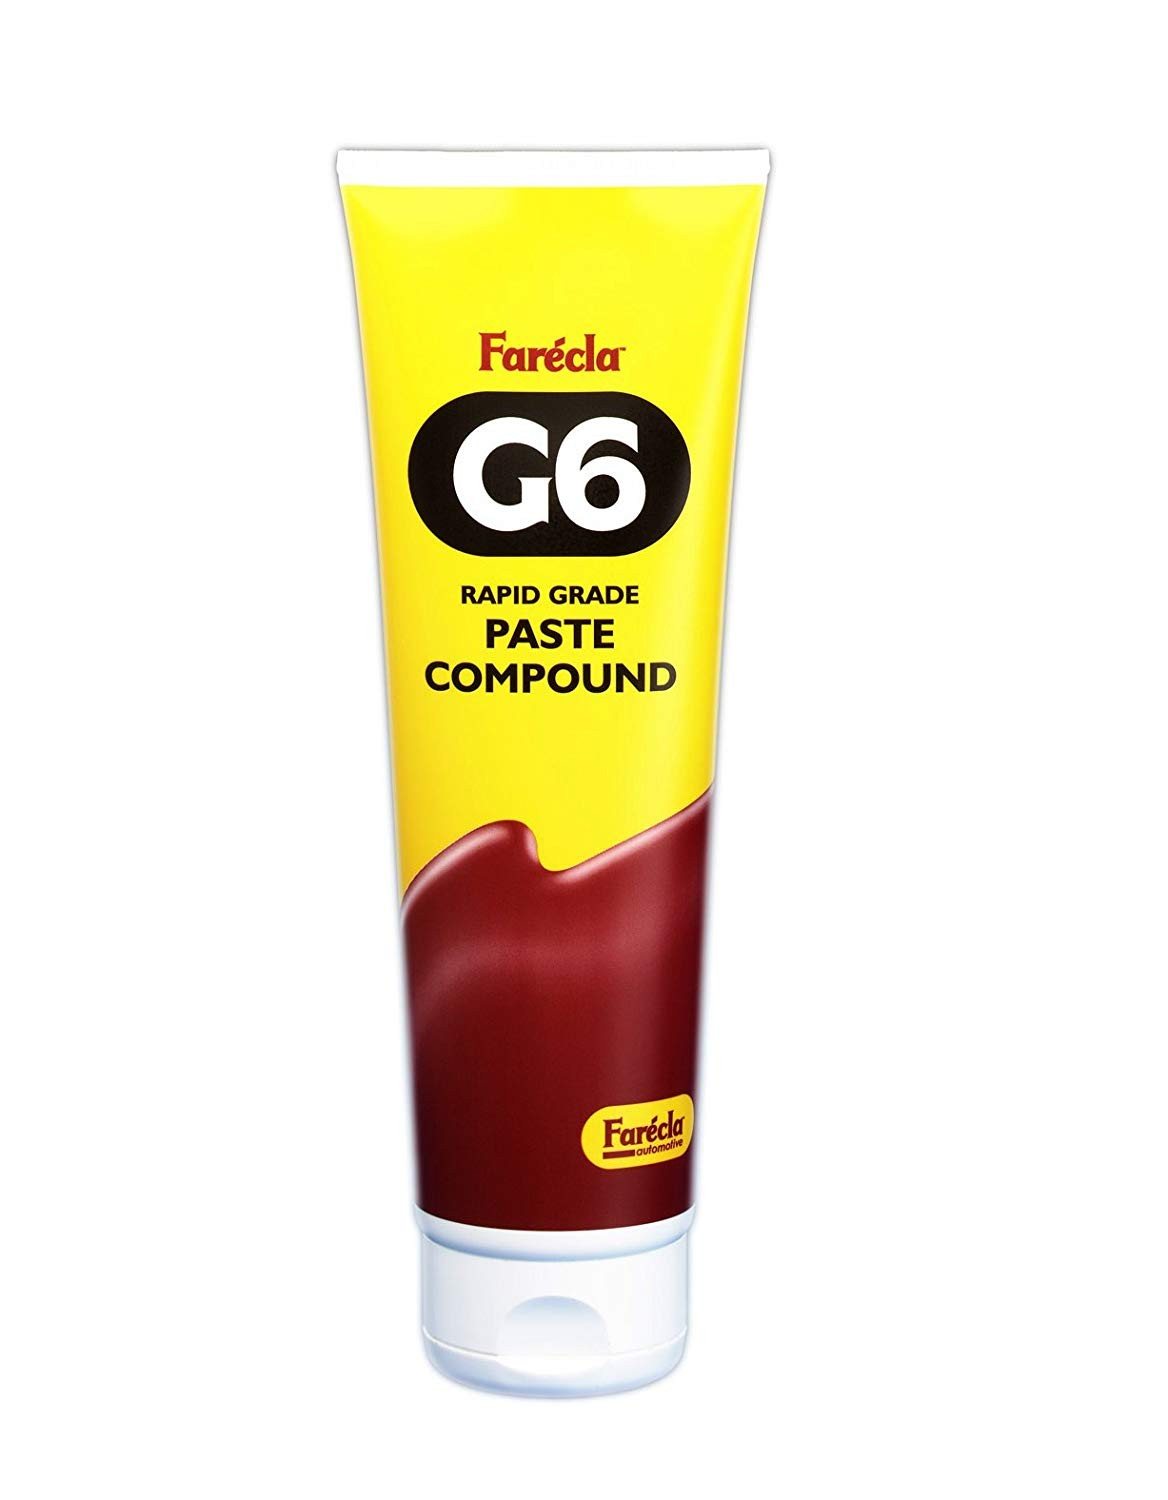 G6 Rapid Grade Paste Compound